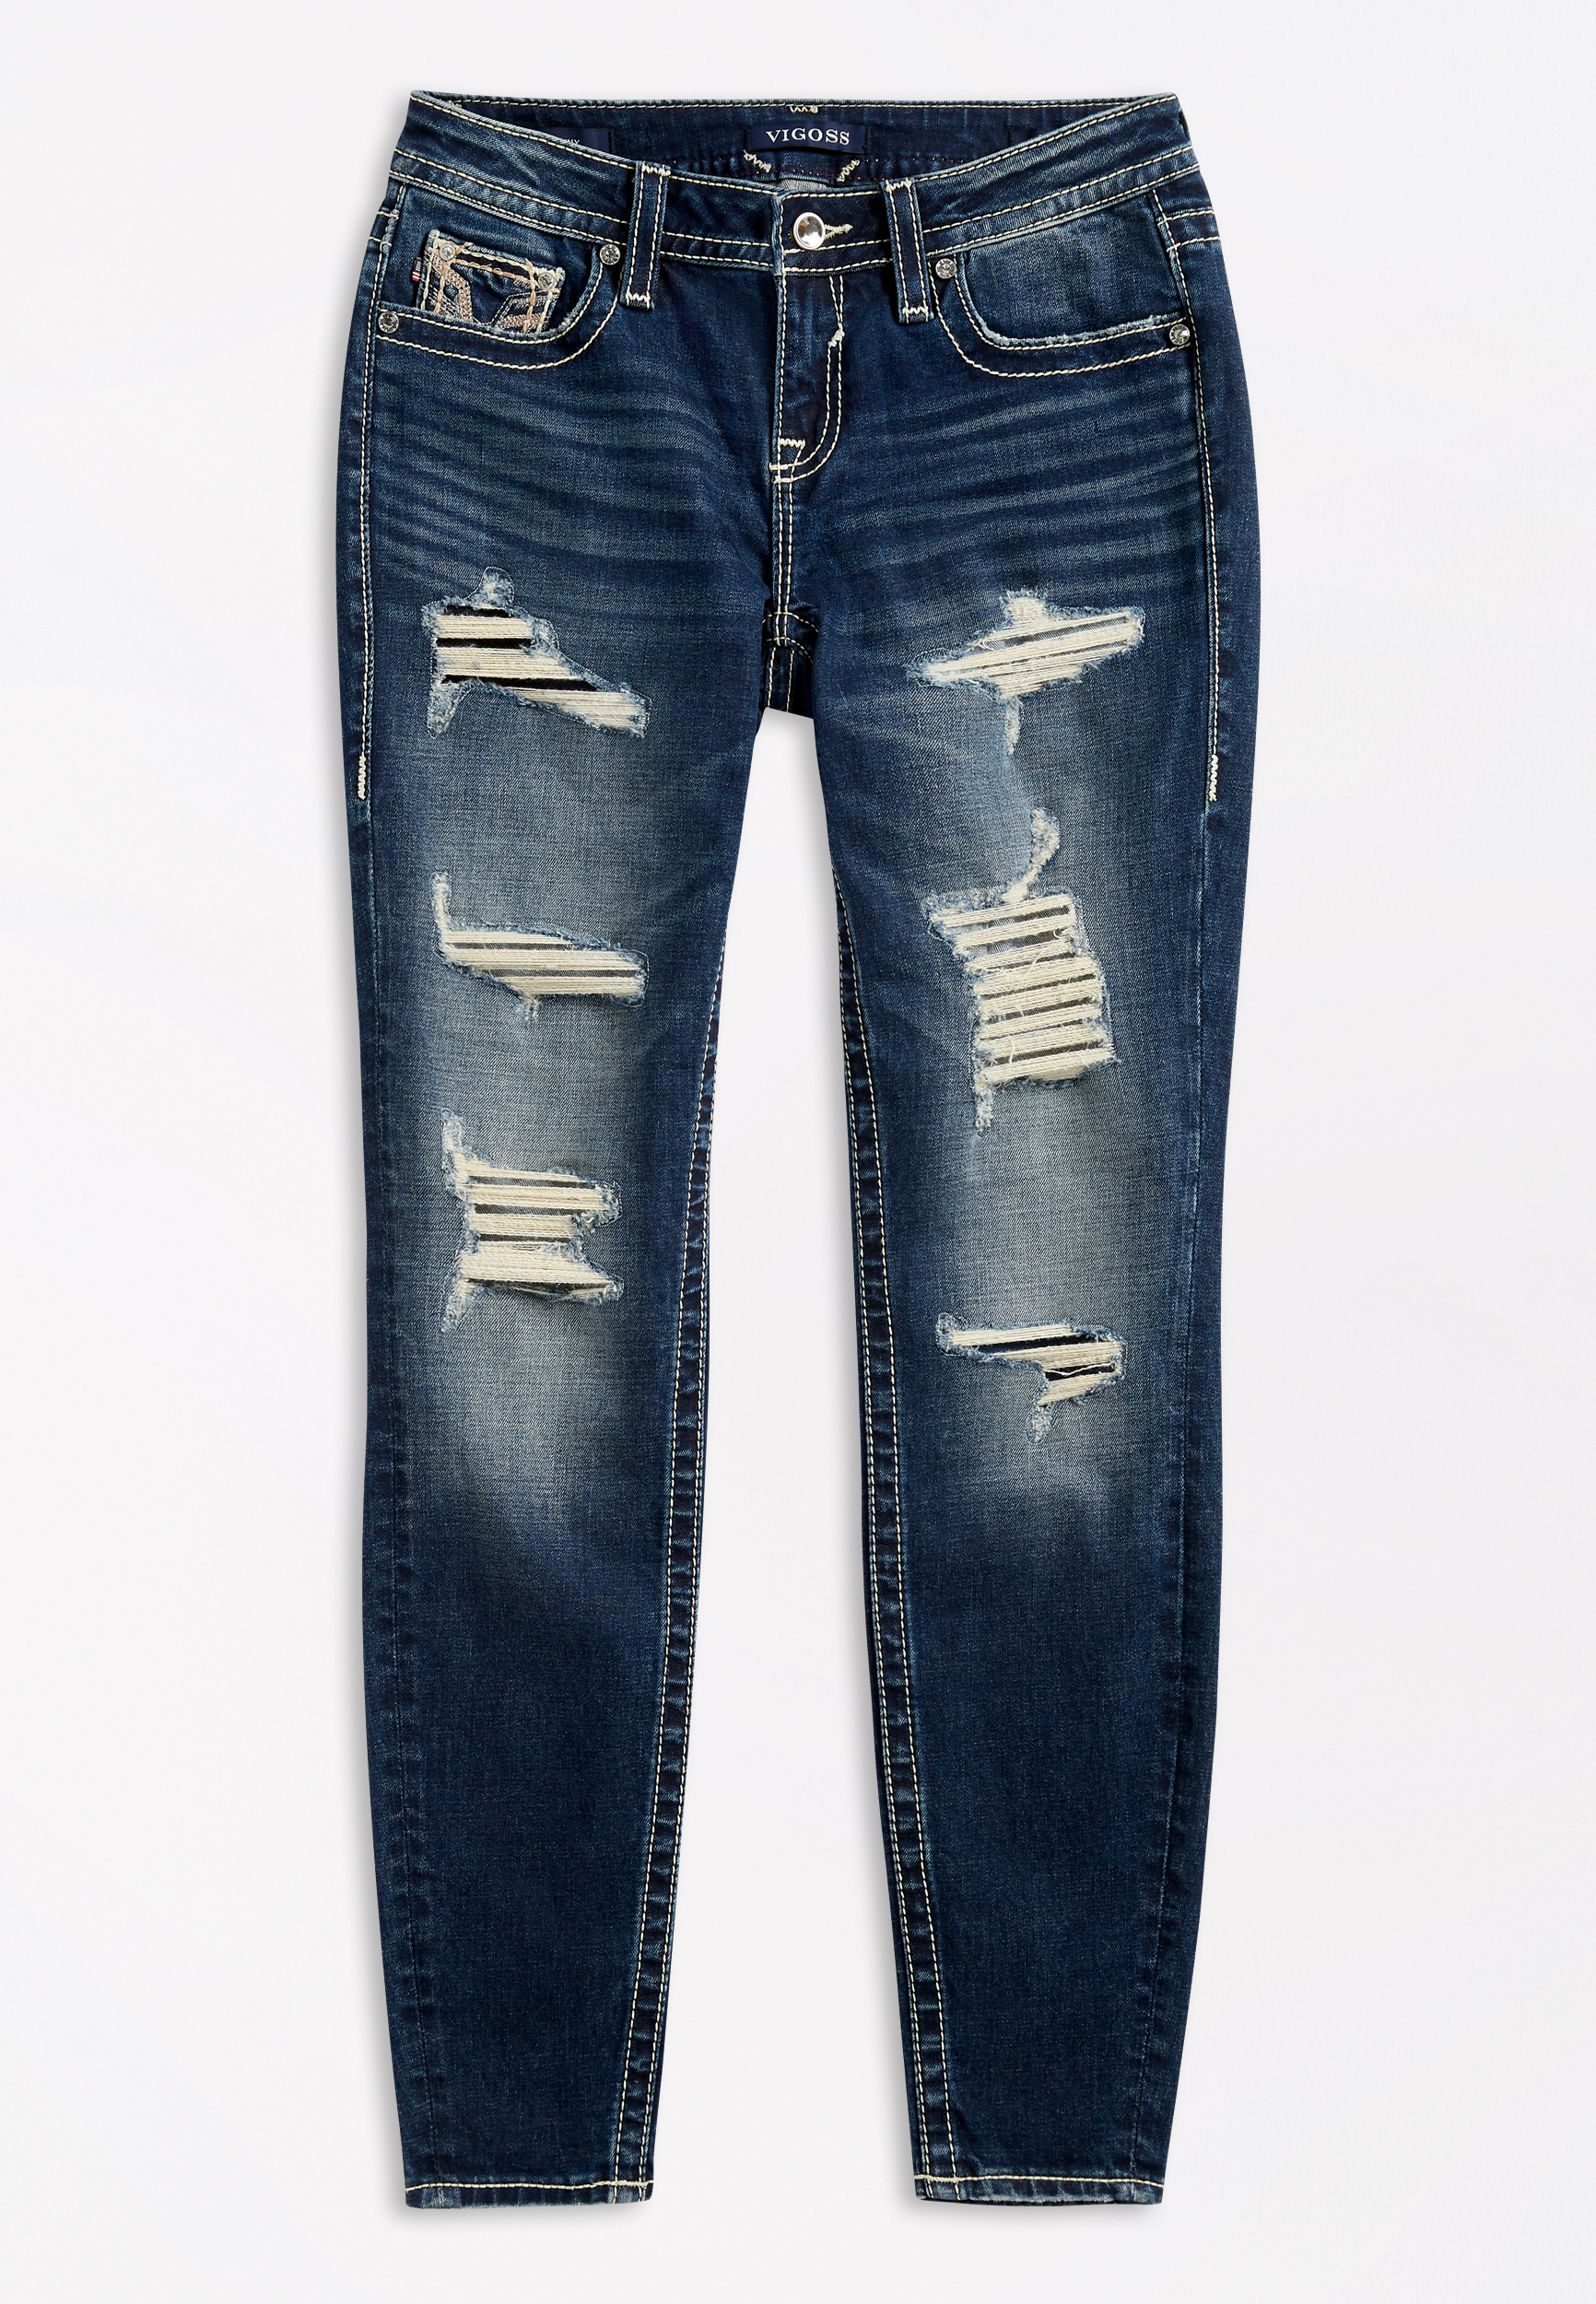 vigoss jeans price